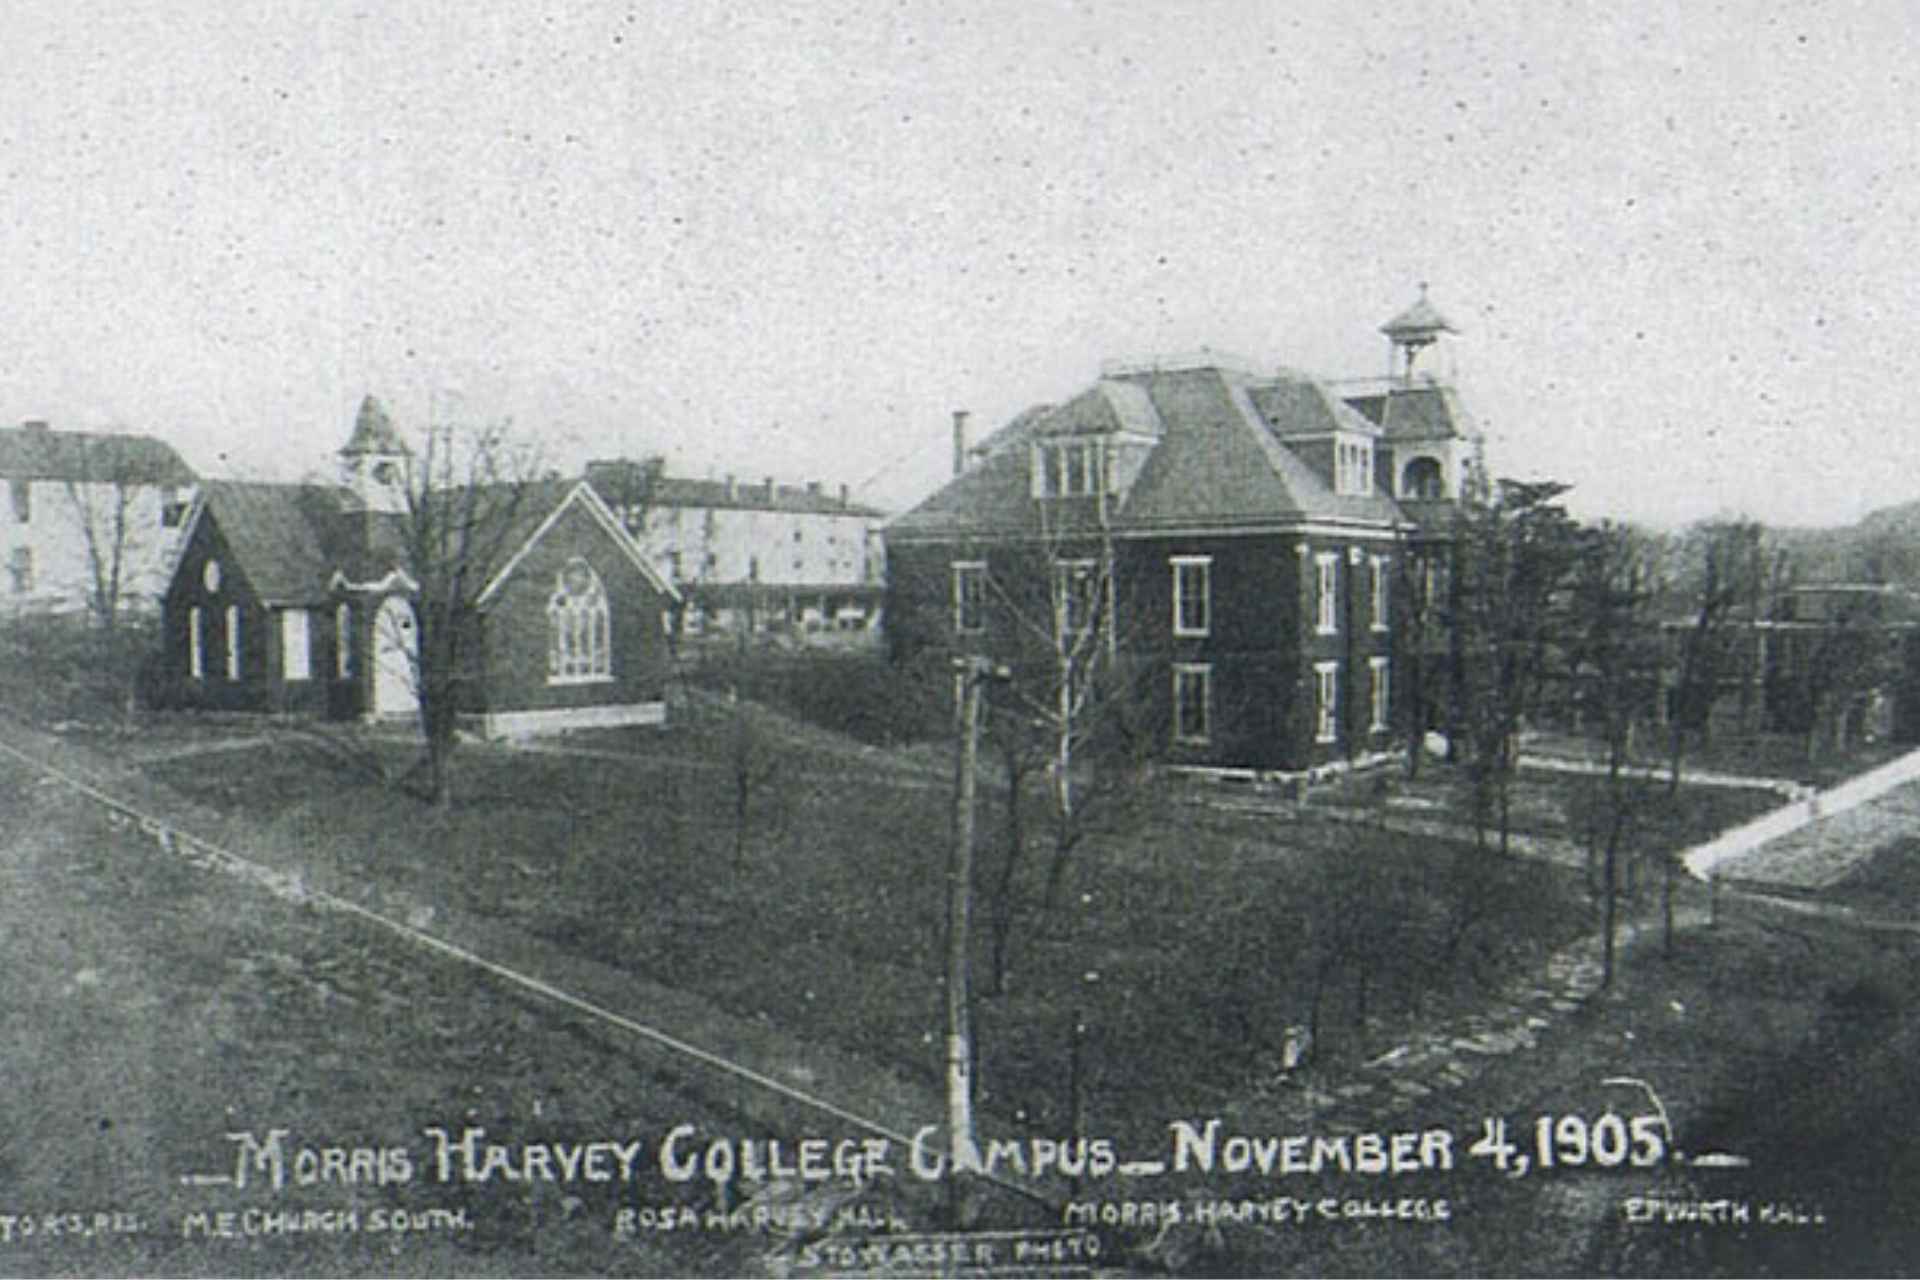 Morris Harvey College in 1905, now the University of Charleston